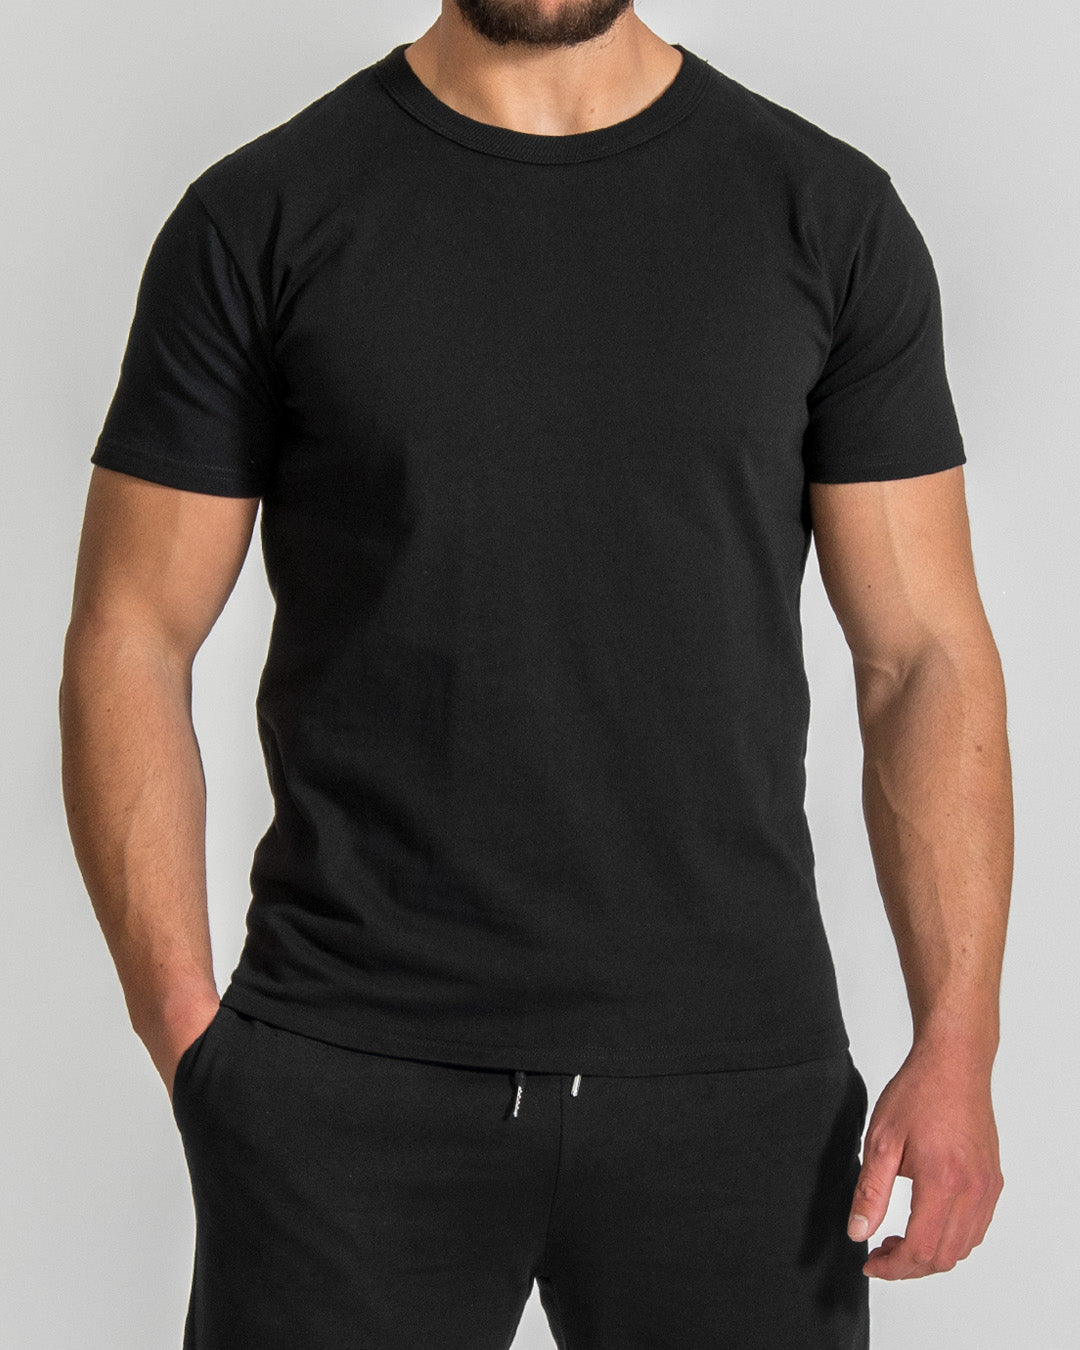 heavyweight-premium-muscle-fit-black-tshirt